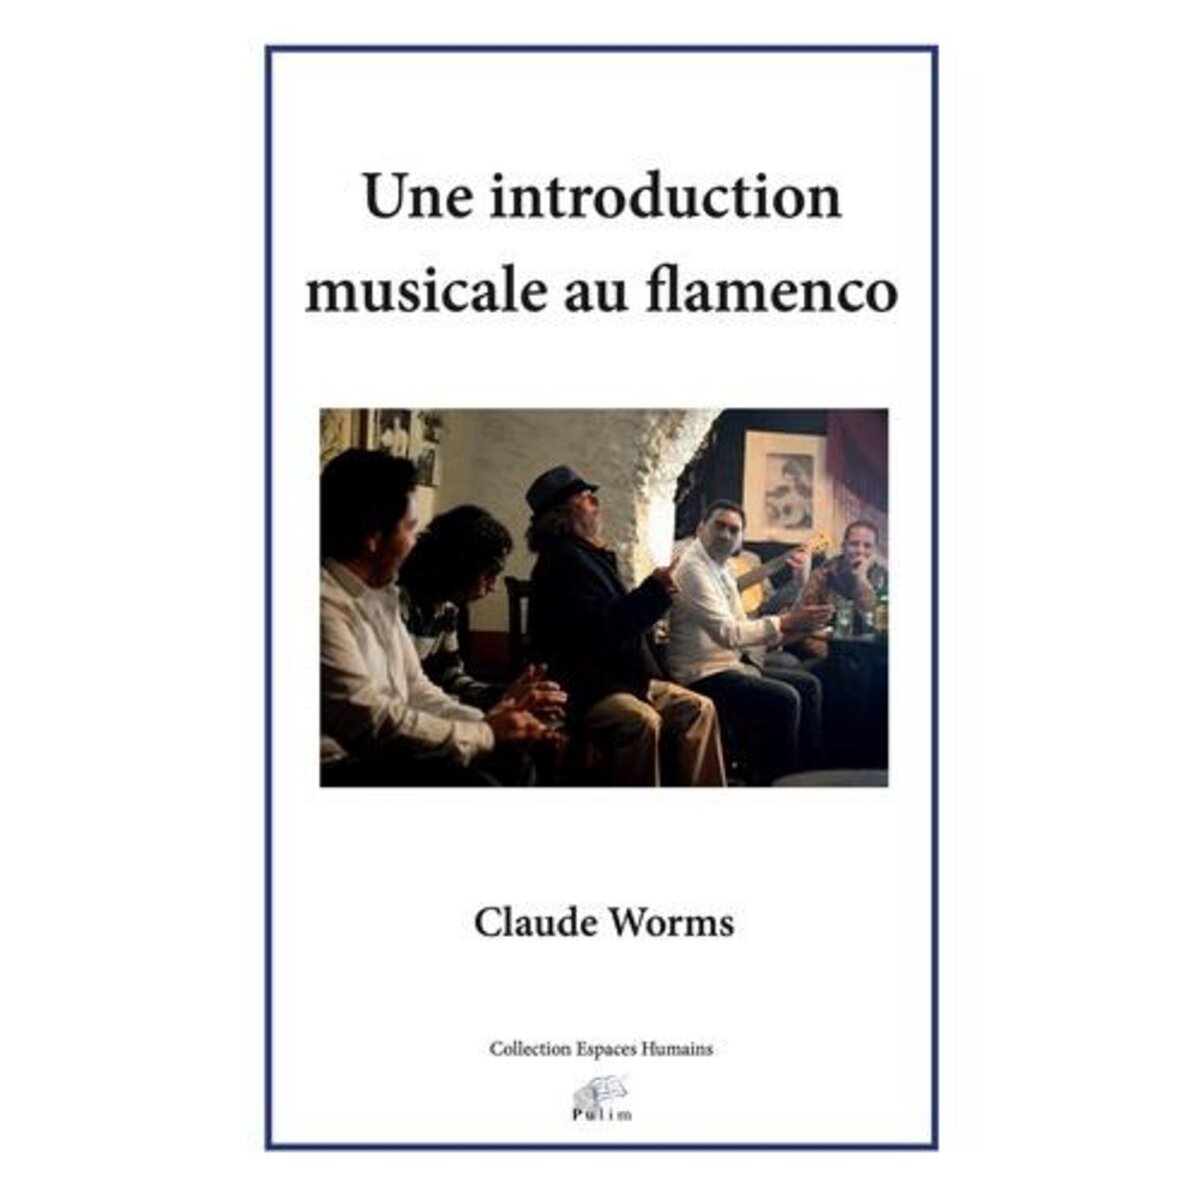  UNE INTRODUCTION MUSICALE AU FLAMENCO, Worms Claude